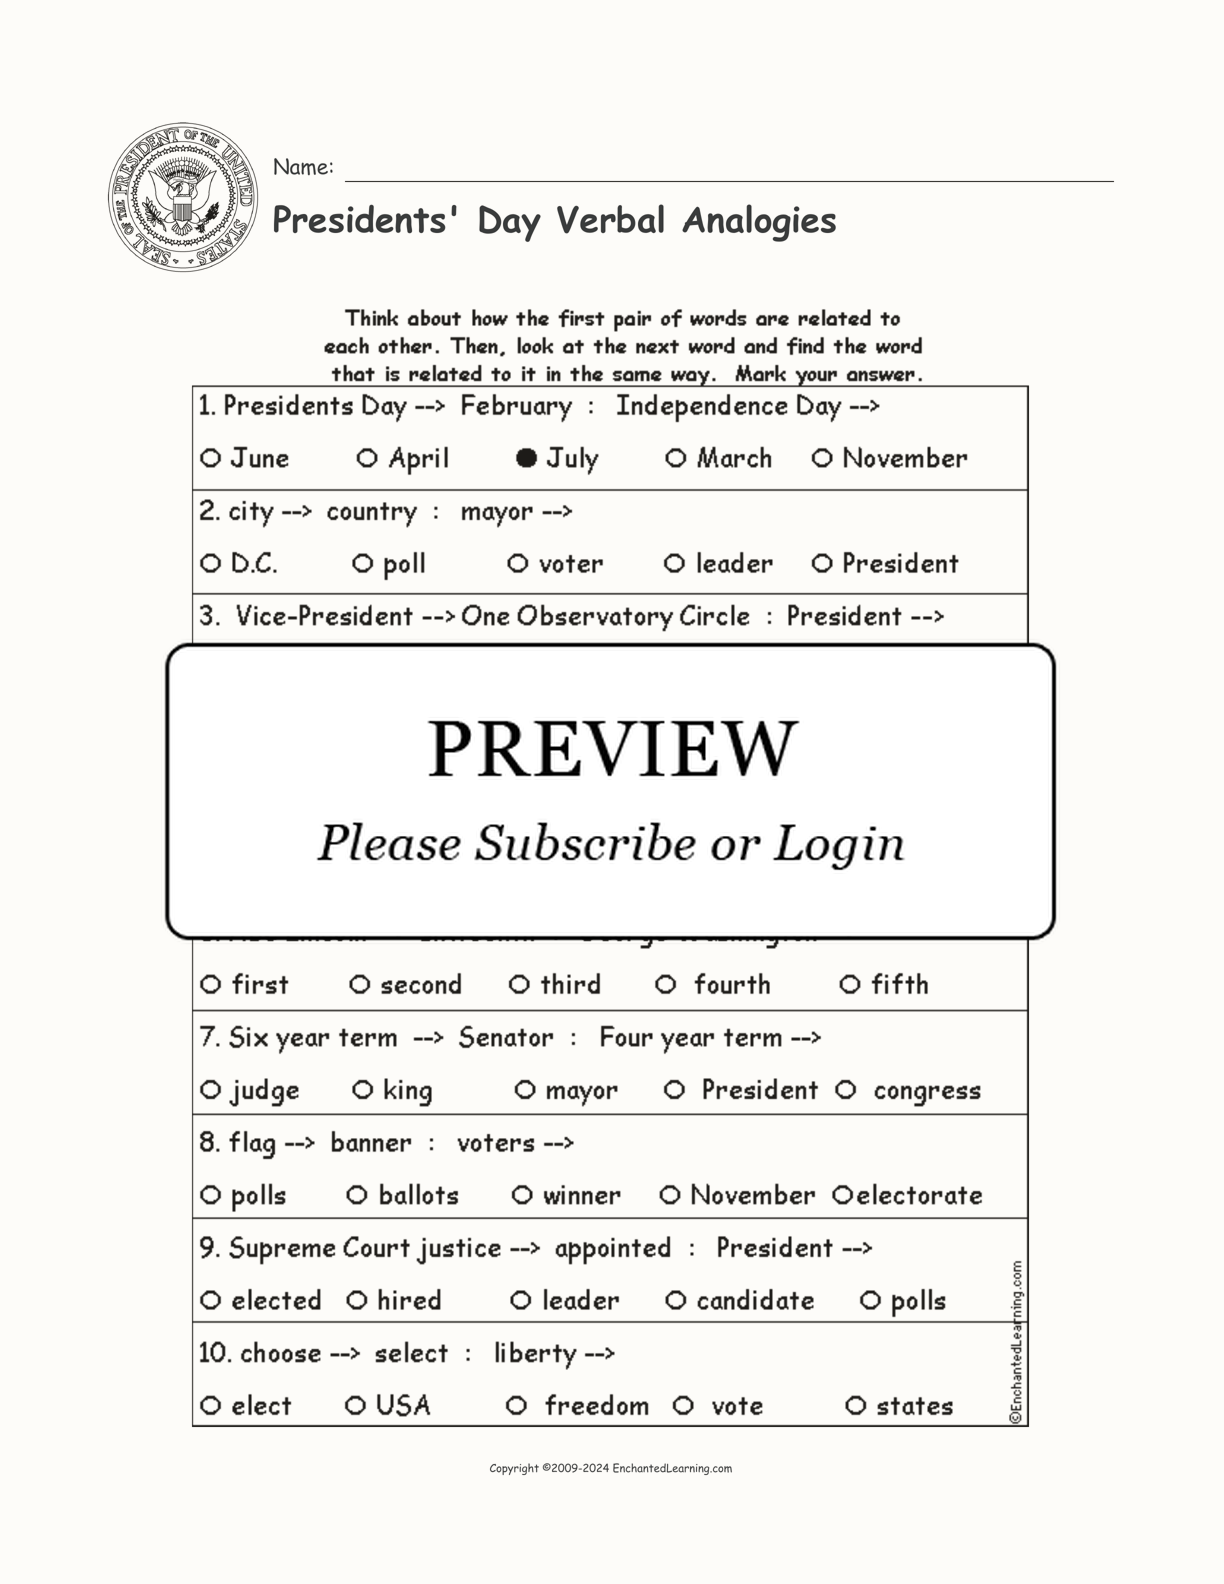 Presidents' Day Verbal Analogies interactive worksheet page 1